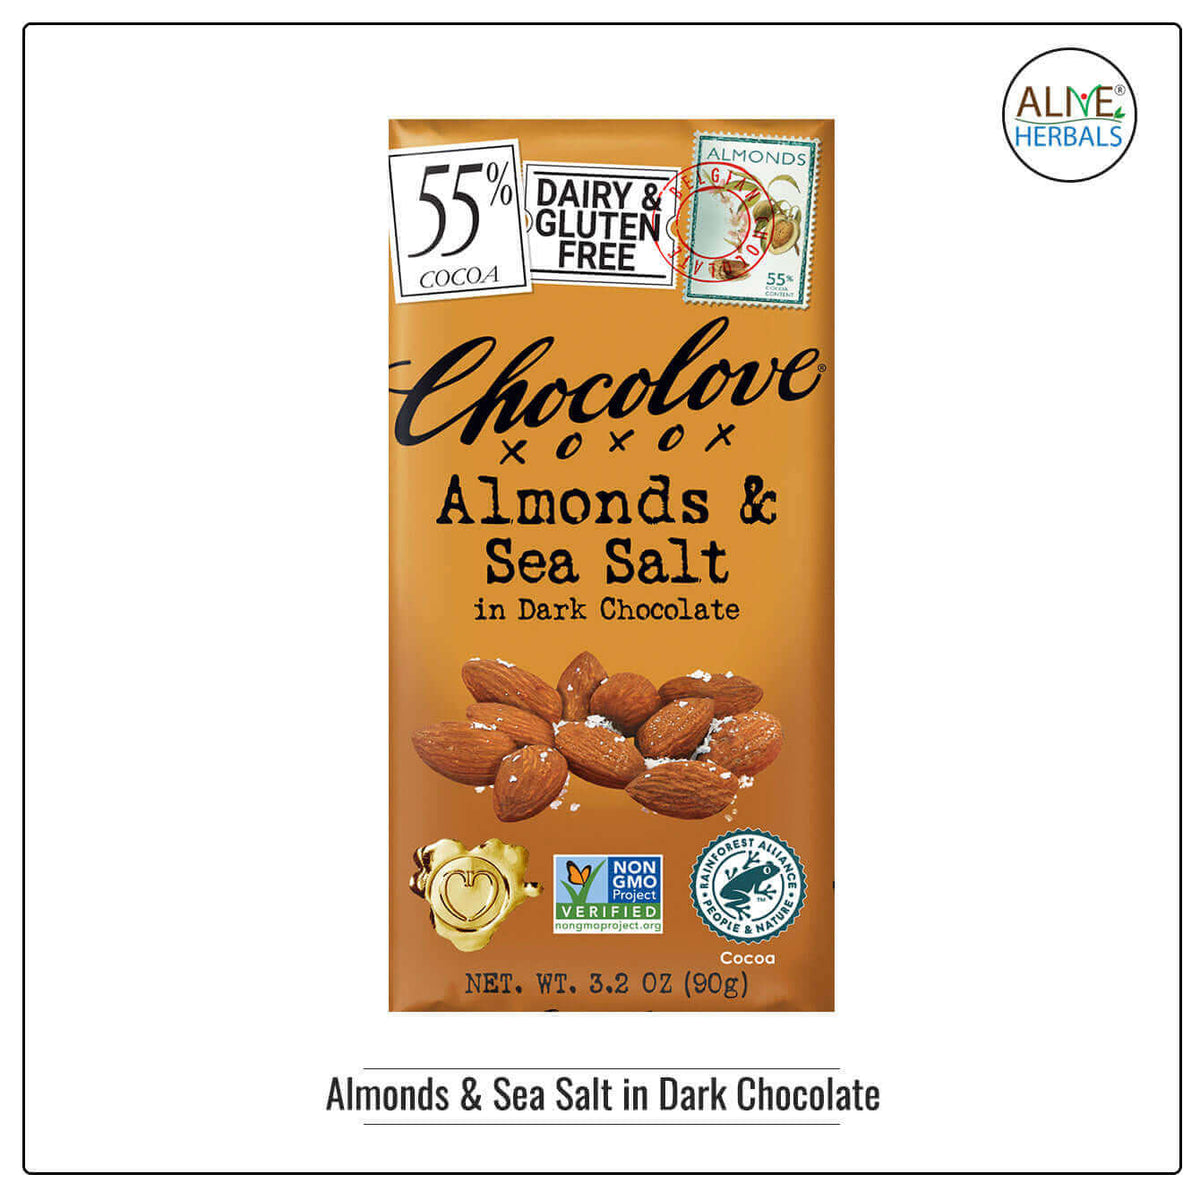 Almonds &amp; Sea Salt in Dark Chocolate - Buy at Natural Food Store | Alive Herbals.